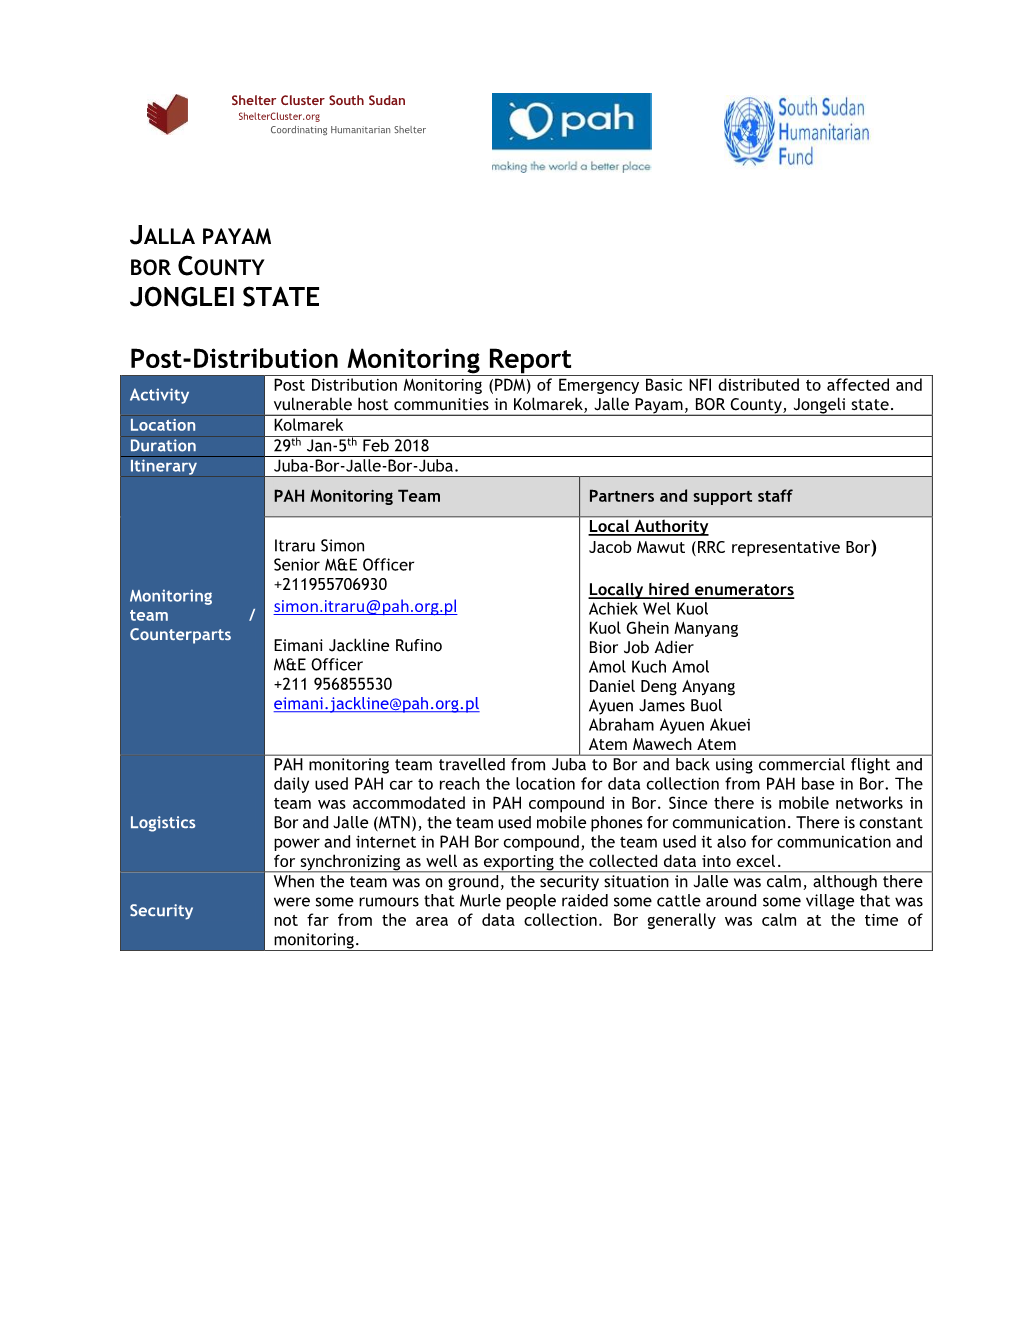 JONGLEI STATE Post-Distribution Monitoring Report